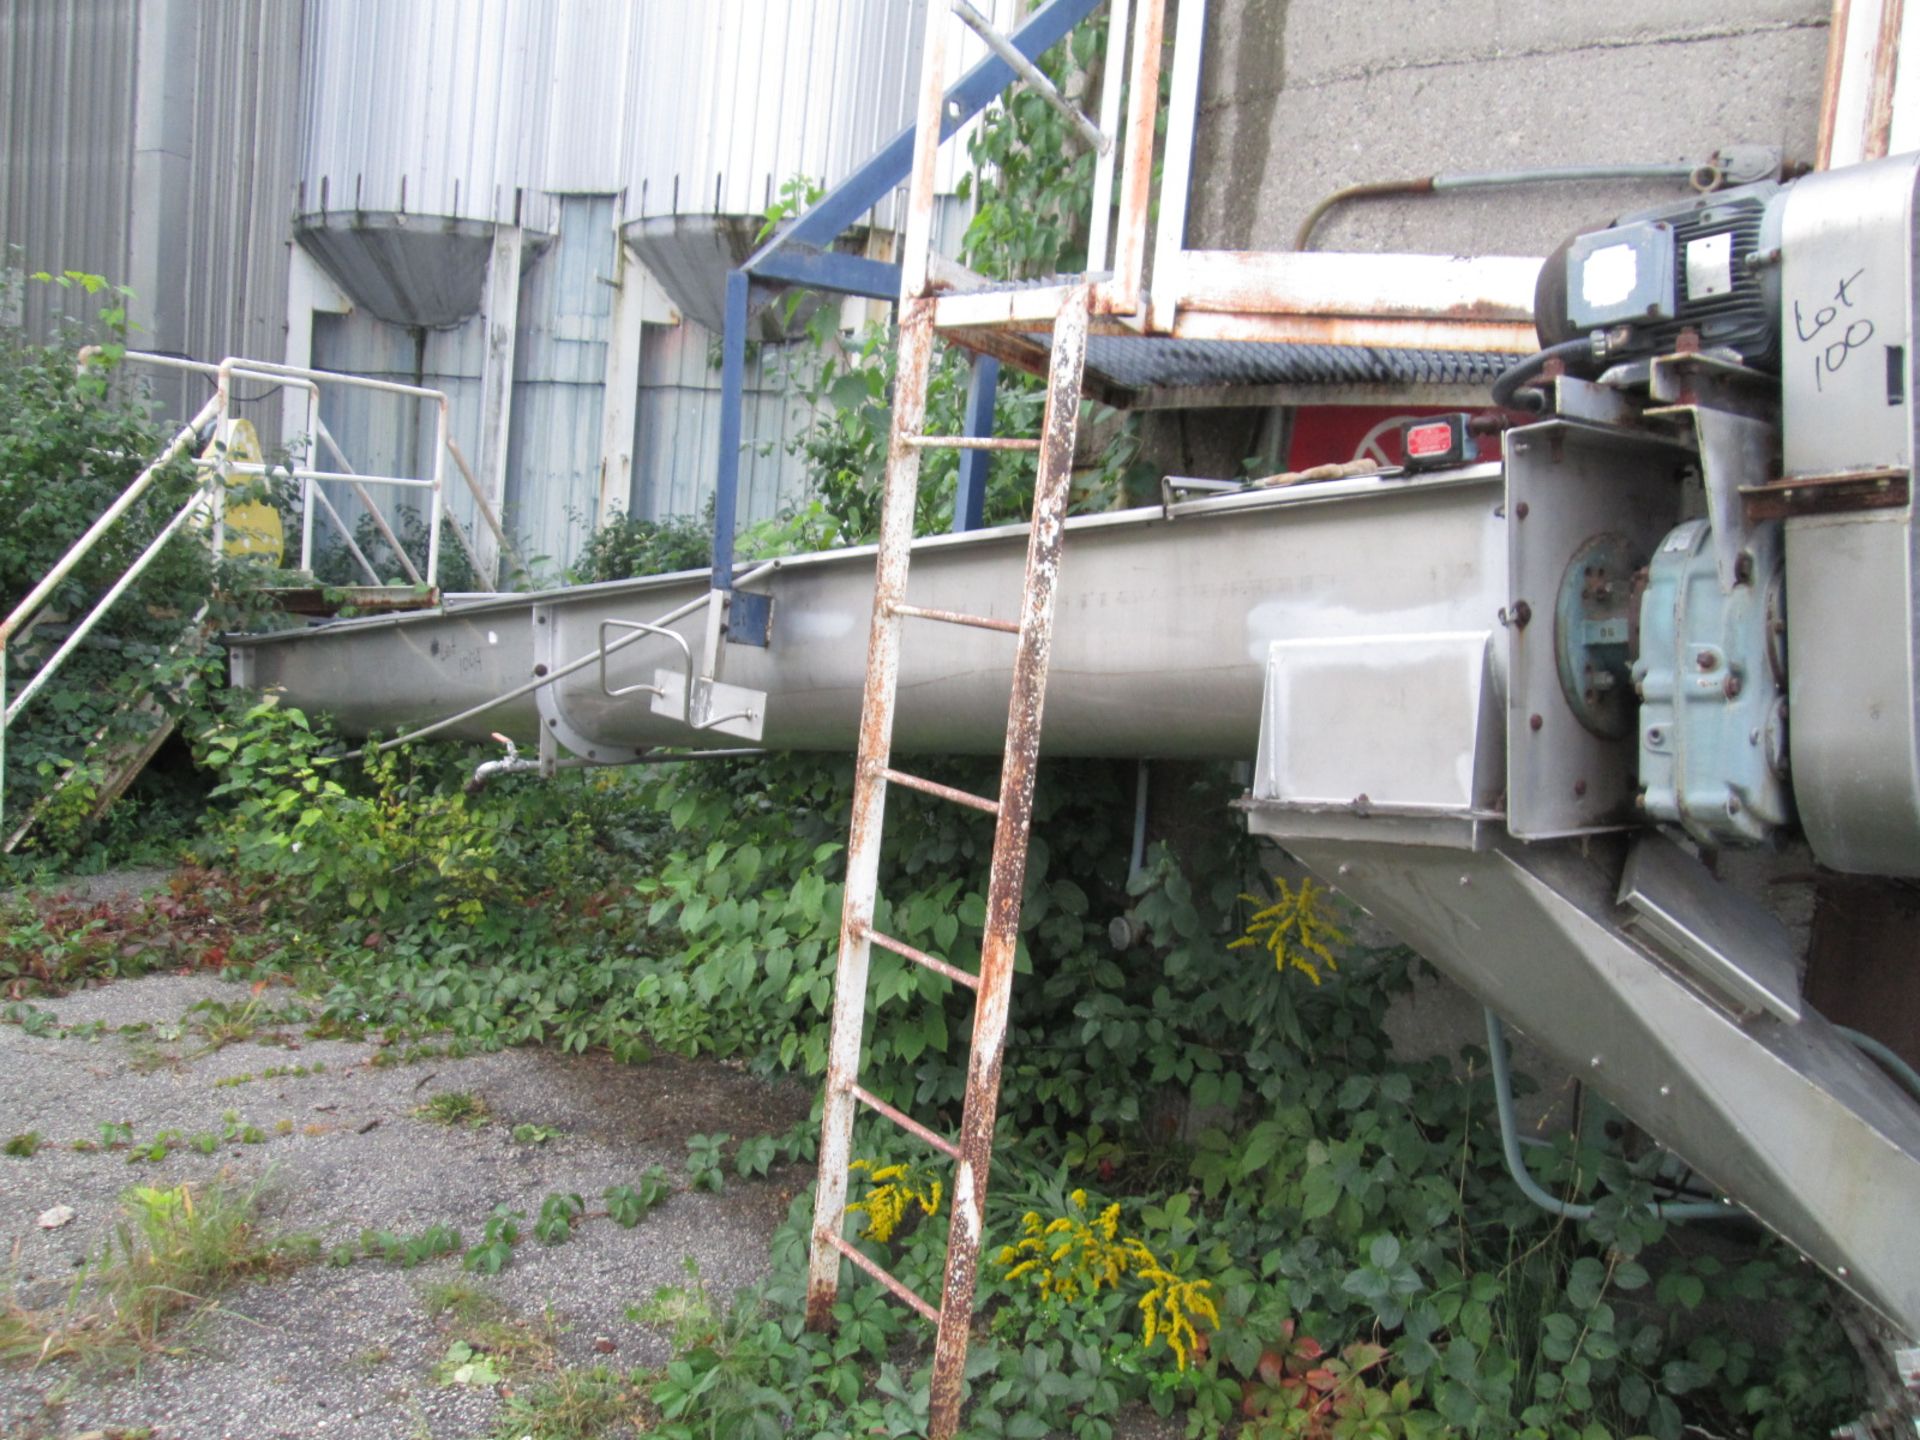 (1) Section Stainless Steel Screw Conveyor 20ft x 14"" Diameter Screw